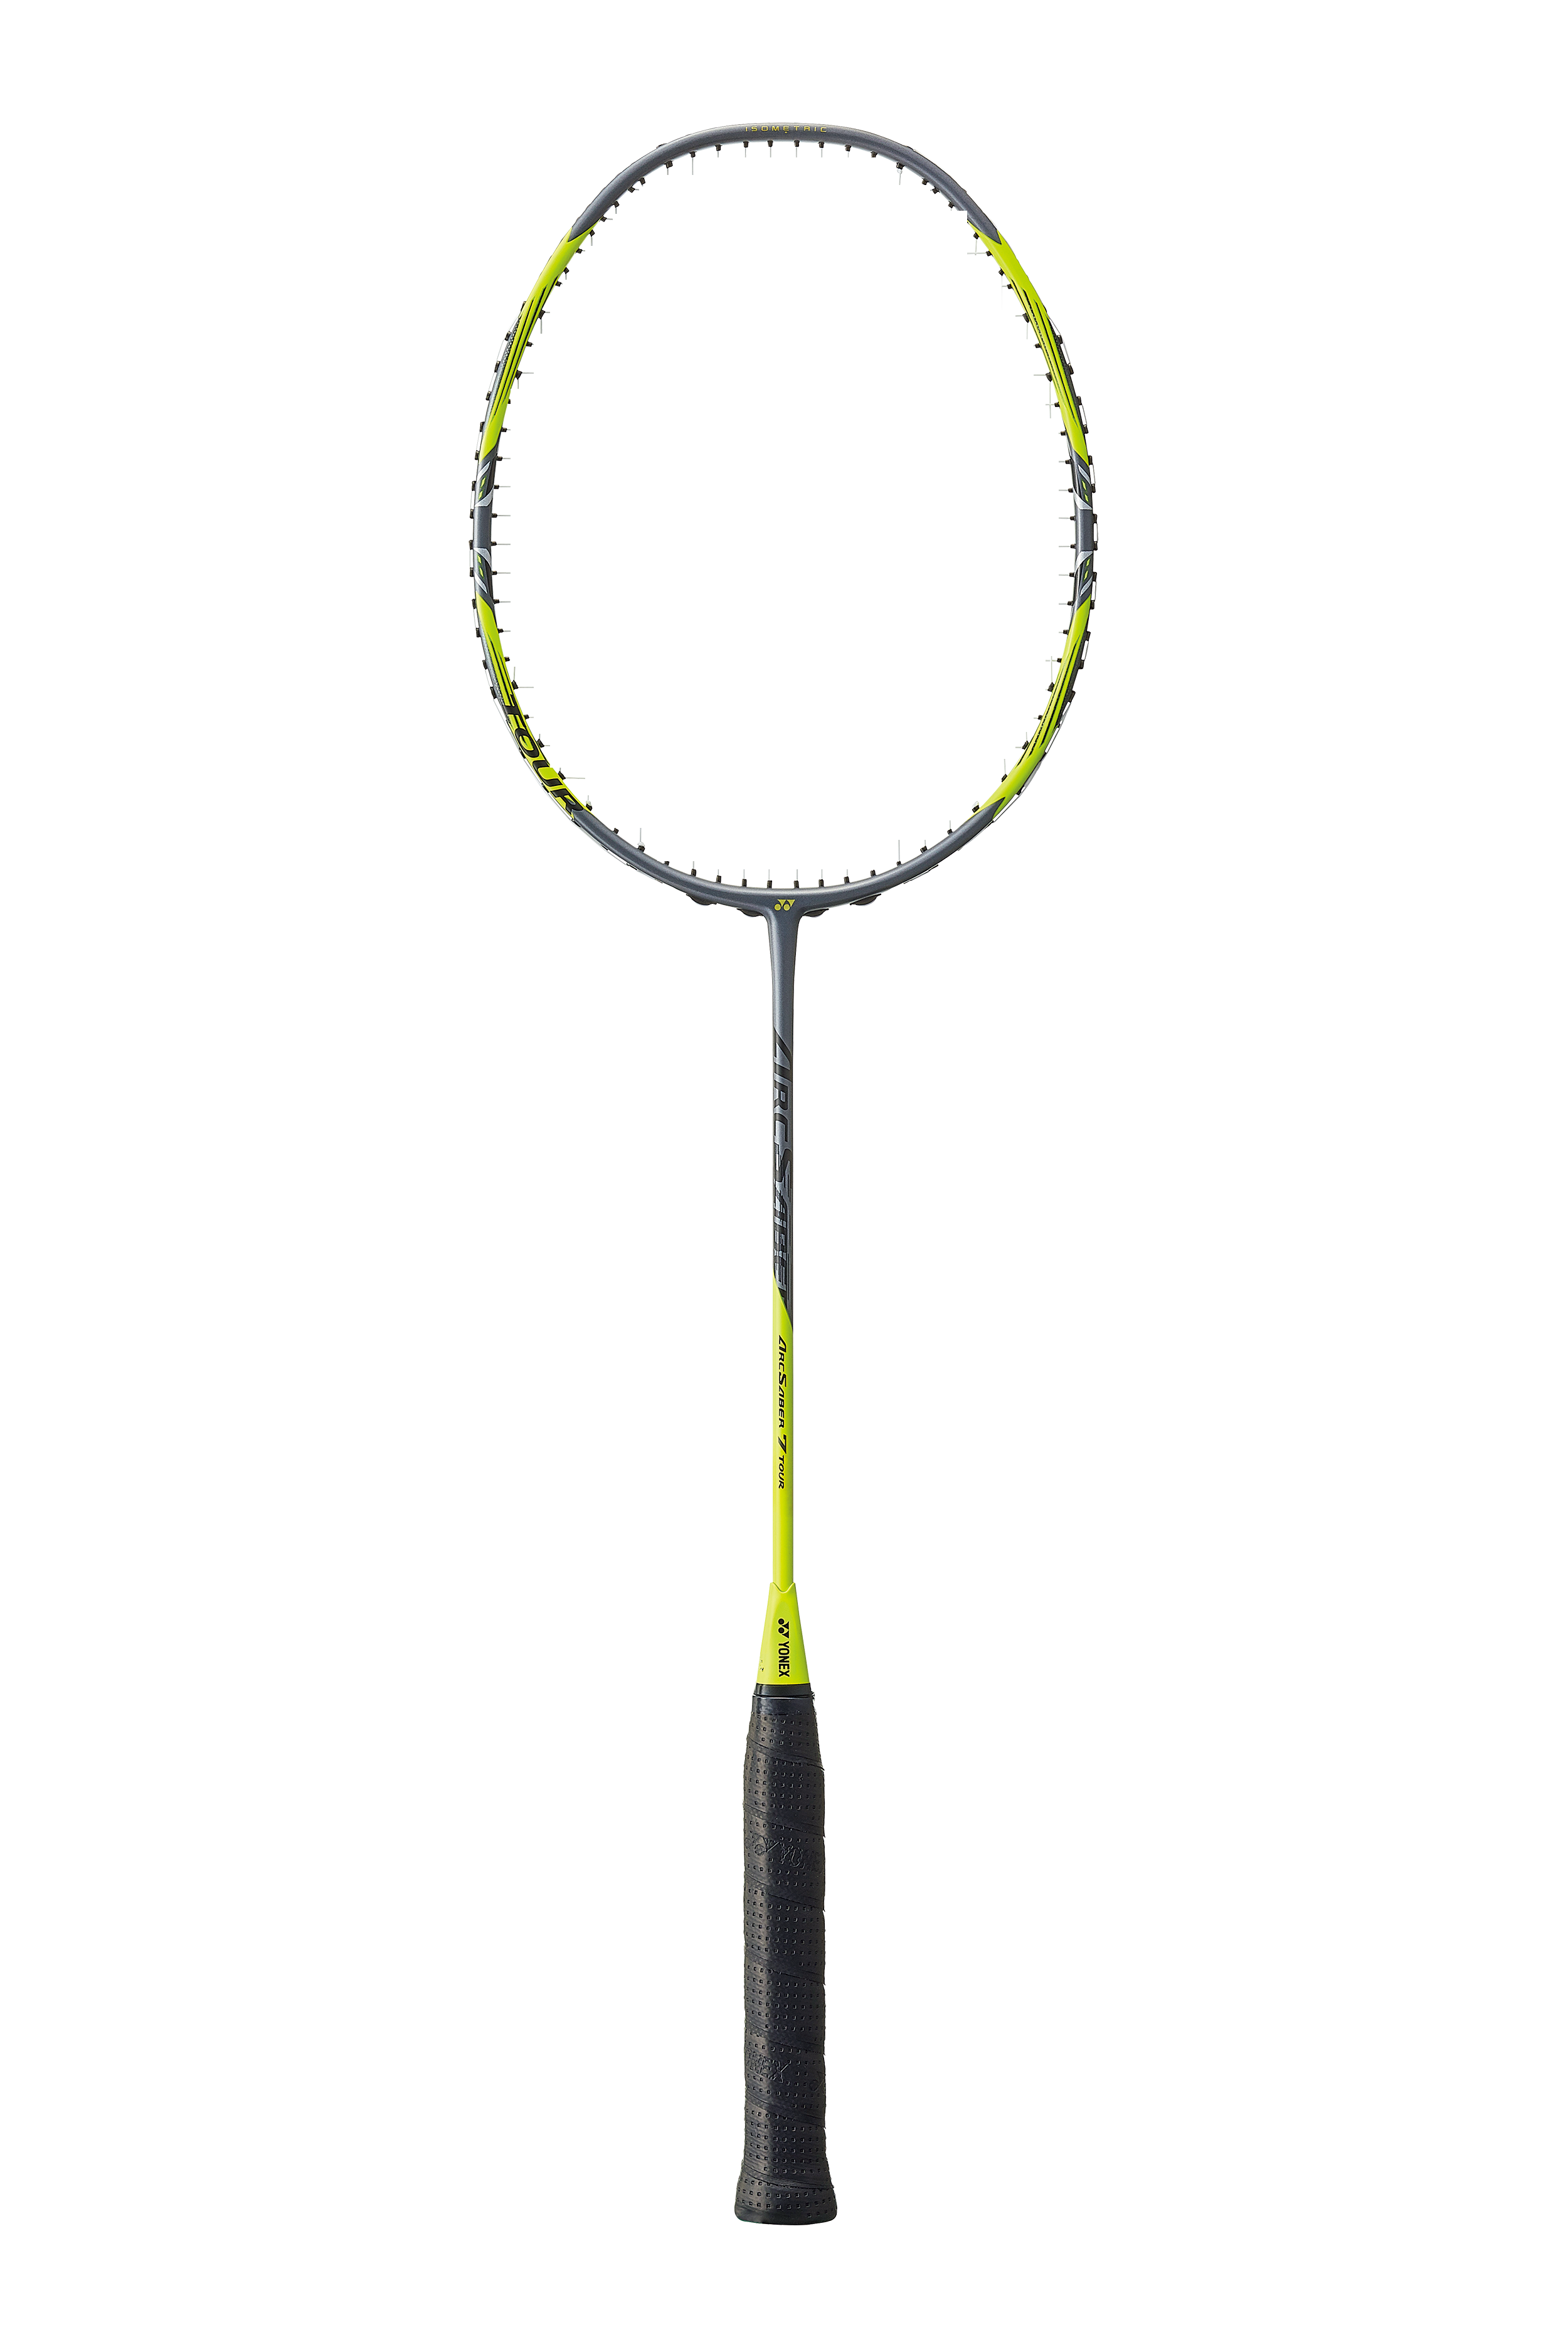 YONEX Arcsaber 7 Tour Badminton Racquet (Gray/Yellow) - ARC7-T - UNSTRUNG - Made in Taiwan